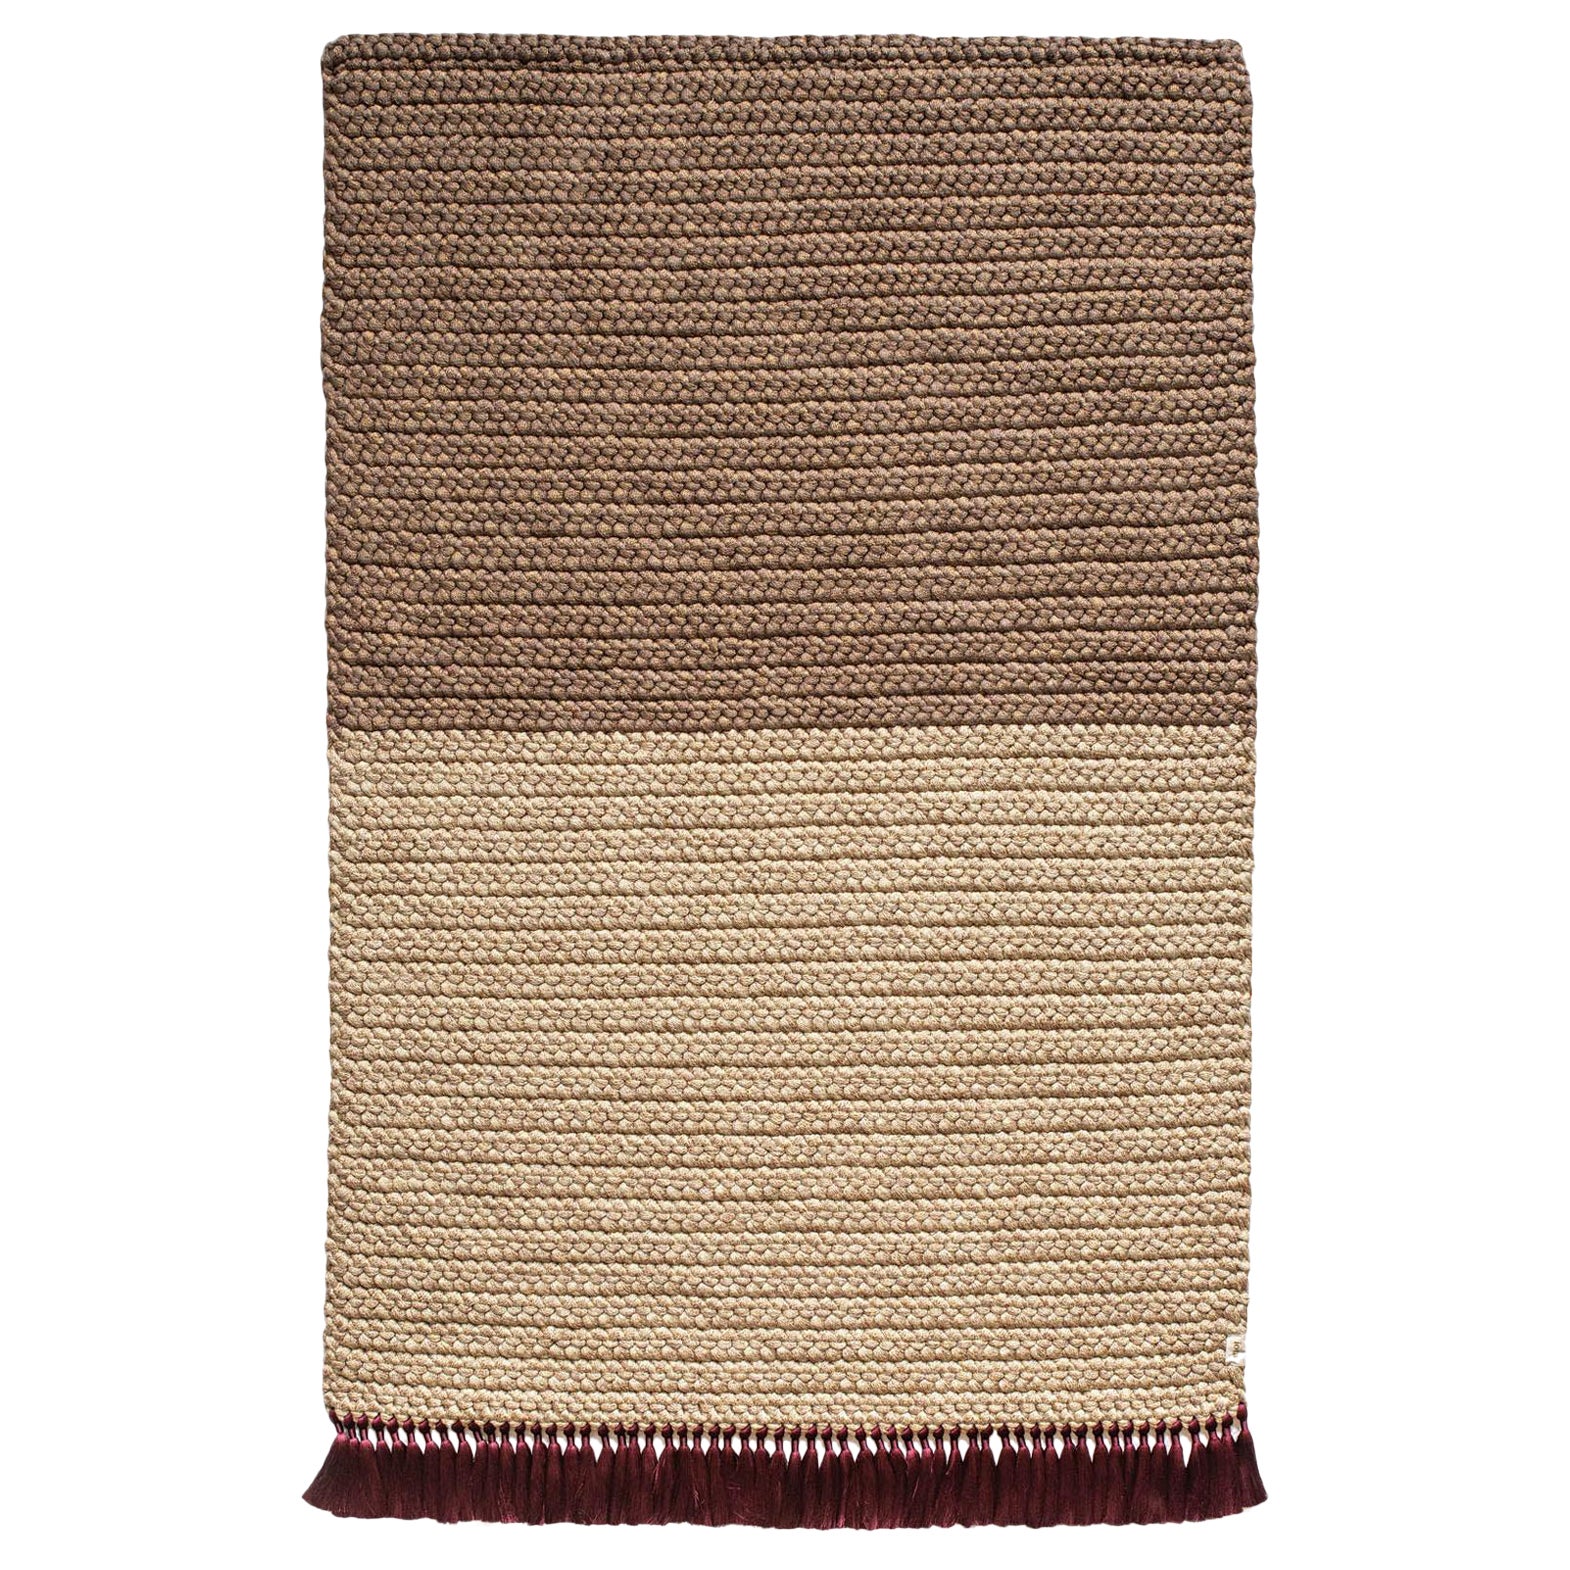 Handmade Crochet Two-Tone Rug in Beige Brown by iota For Sale